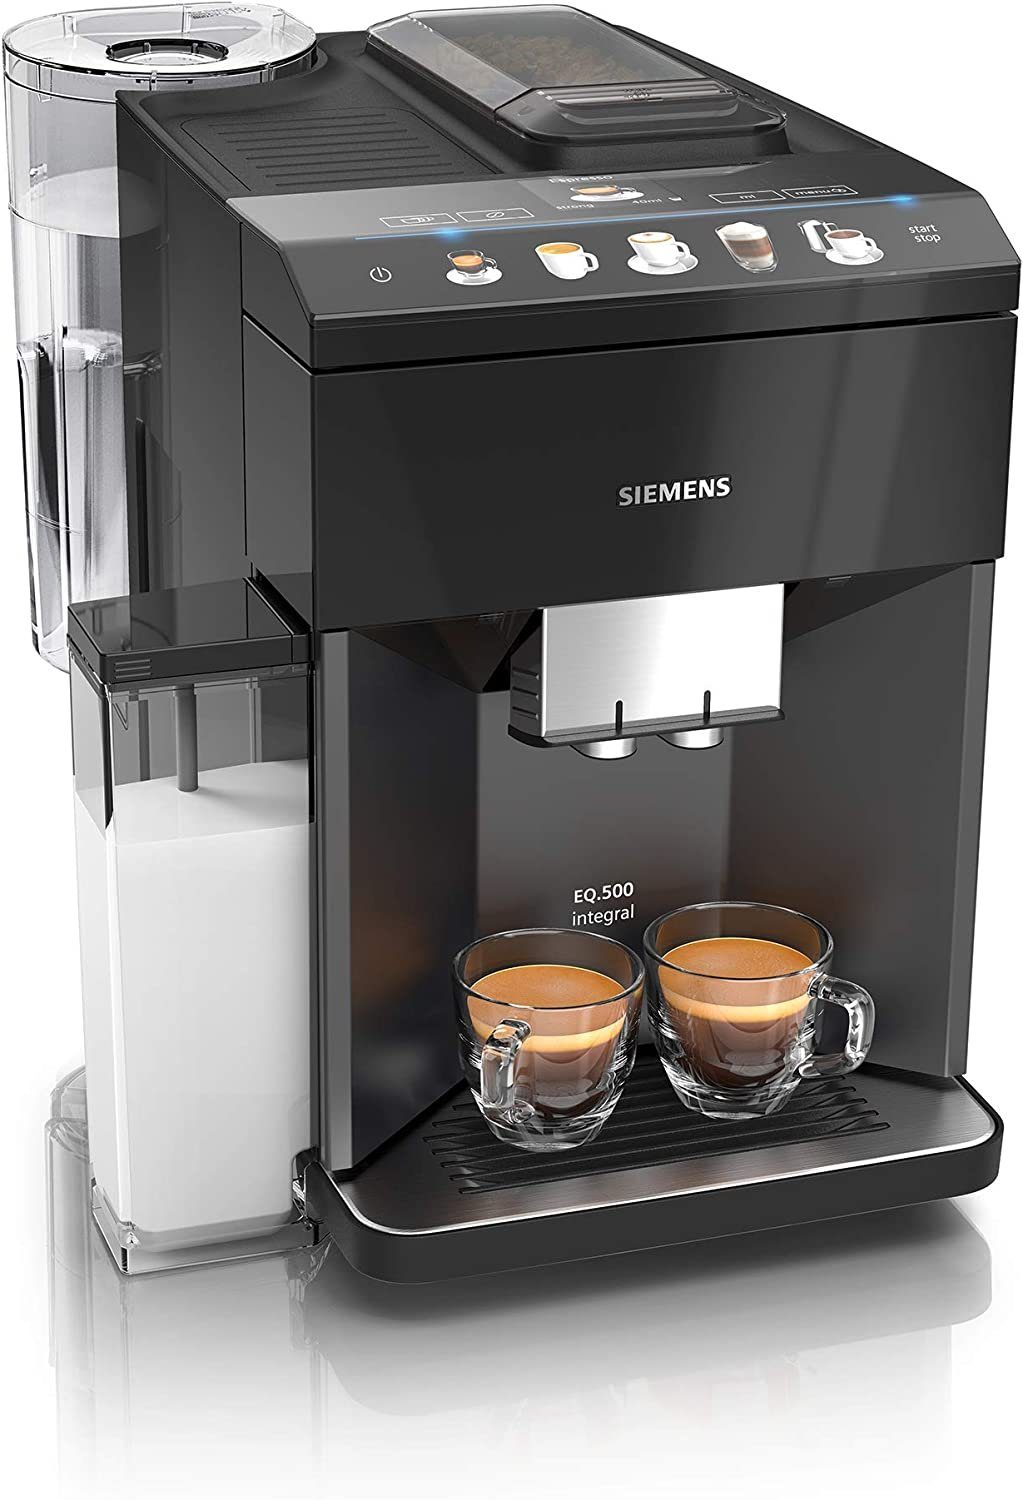 SIEMENS Kaffeevollautomat iQ500 TP503D09 – (Schwarz, Edelstahl)